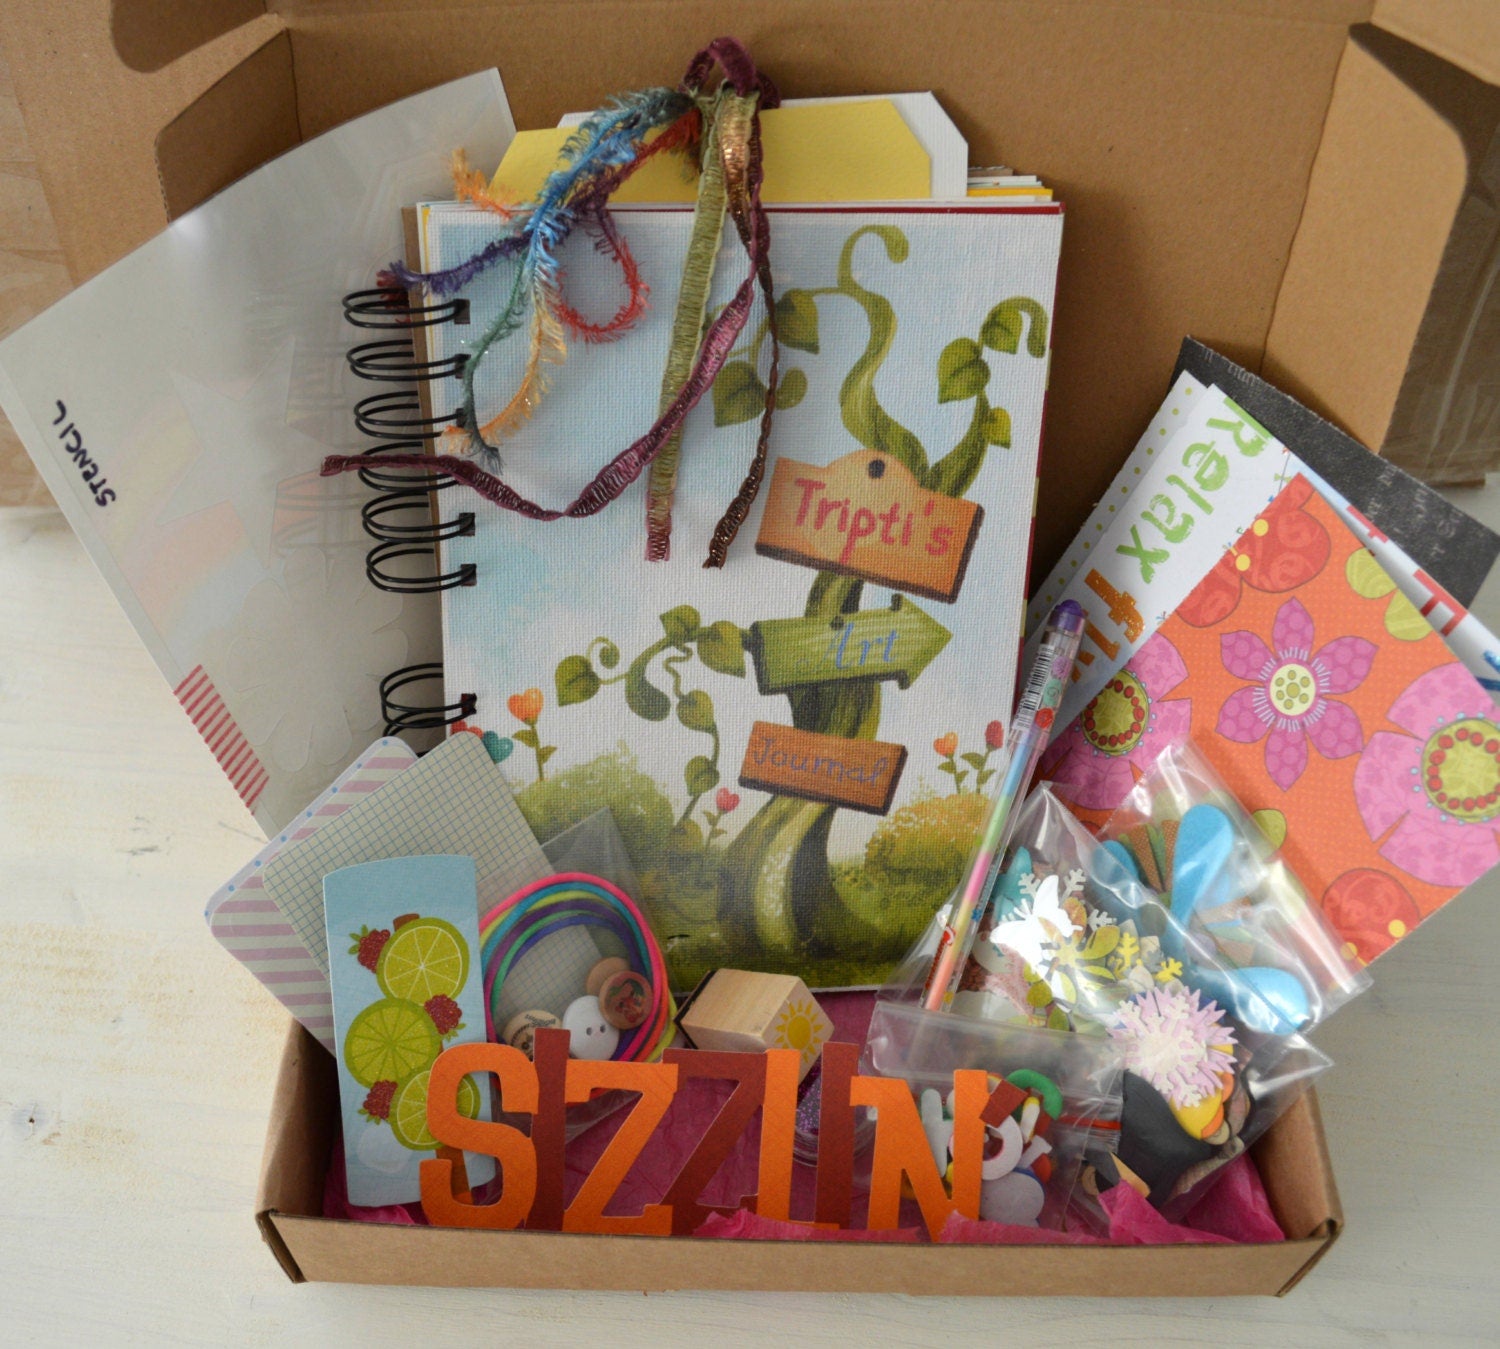 Personalized Art Kit for kids, Kids Gift Box with art journaling supplies,  Christmas travel craft kit, homeschool art for creative children